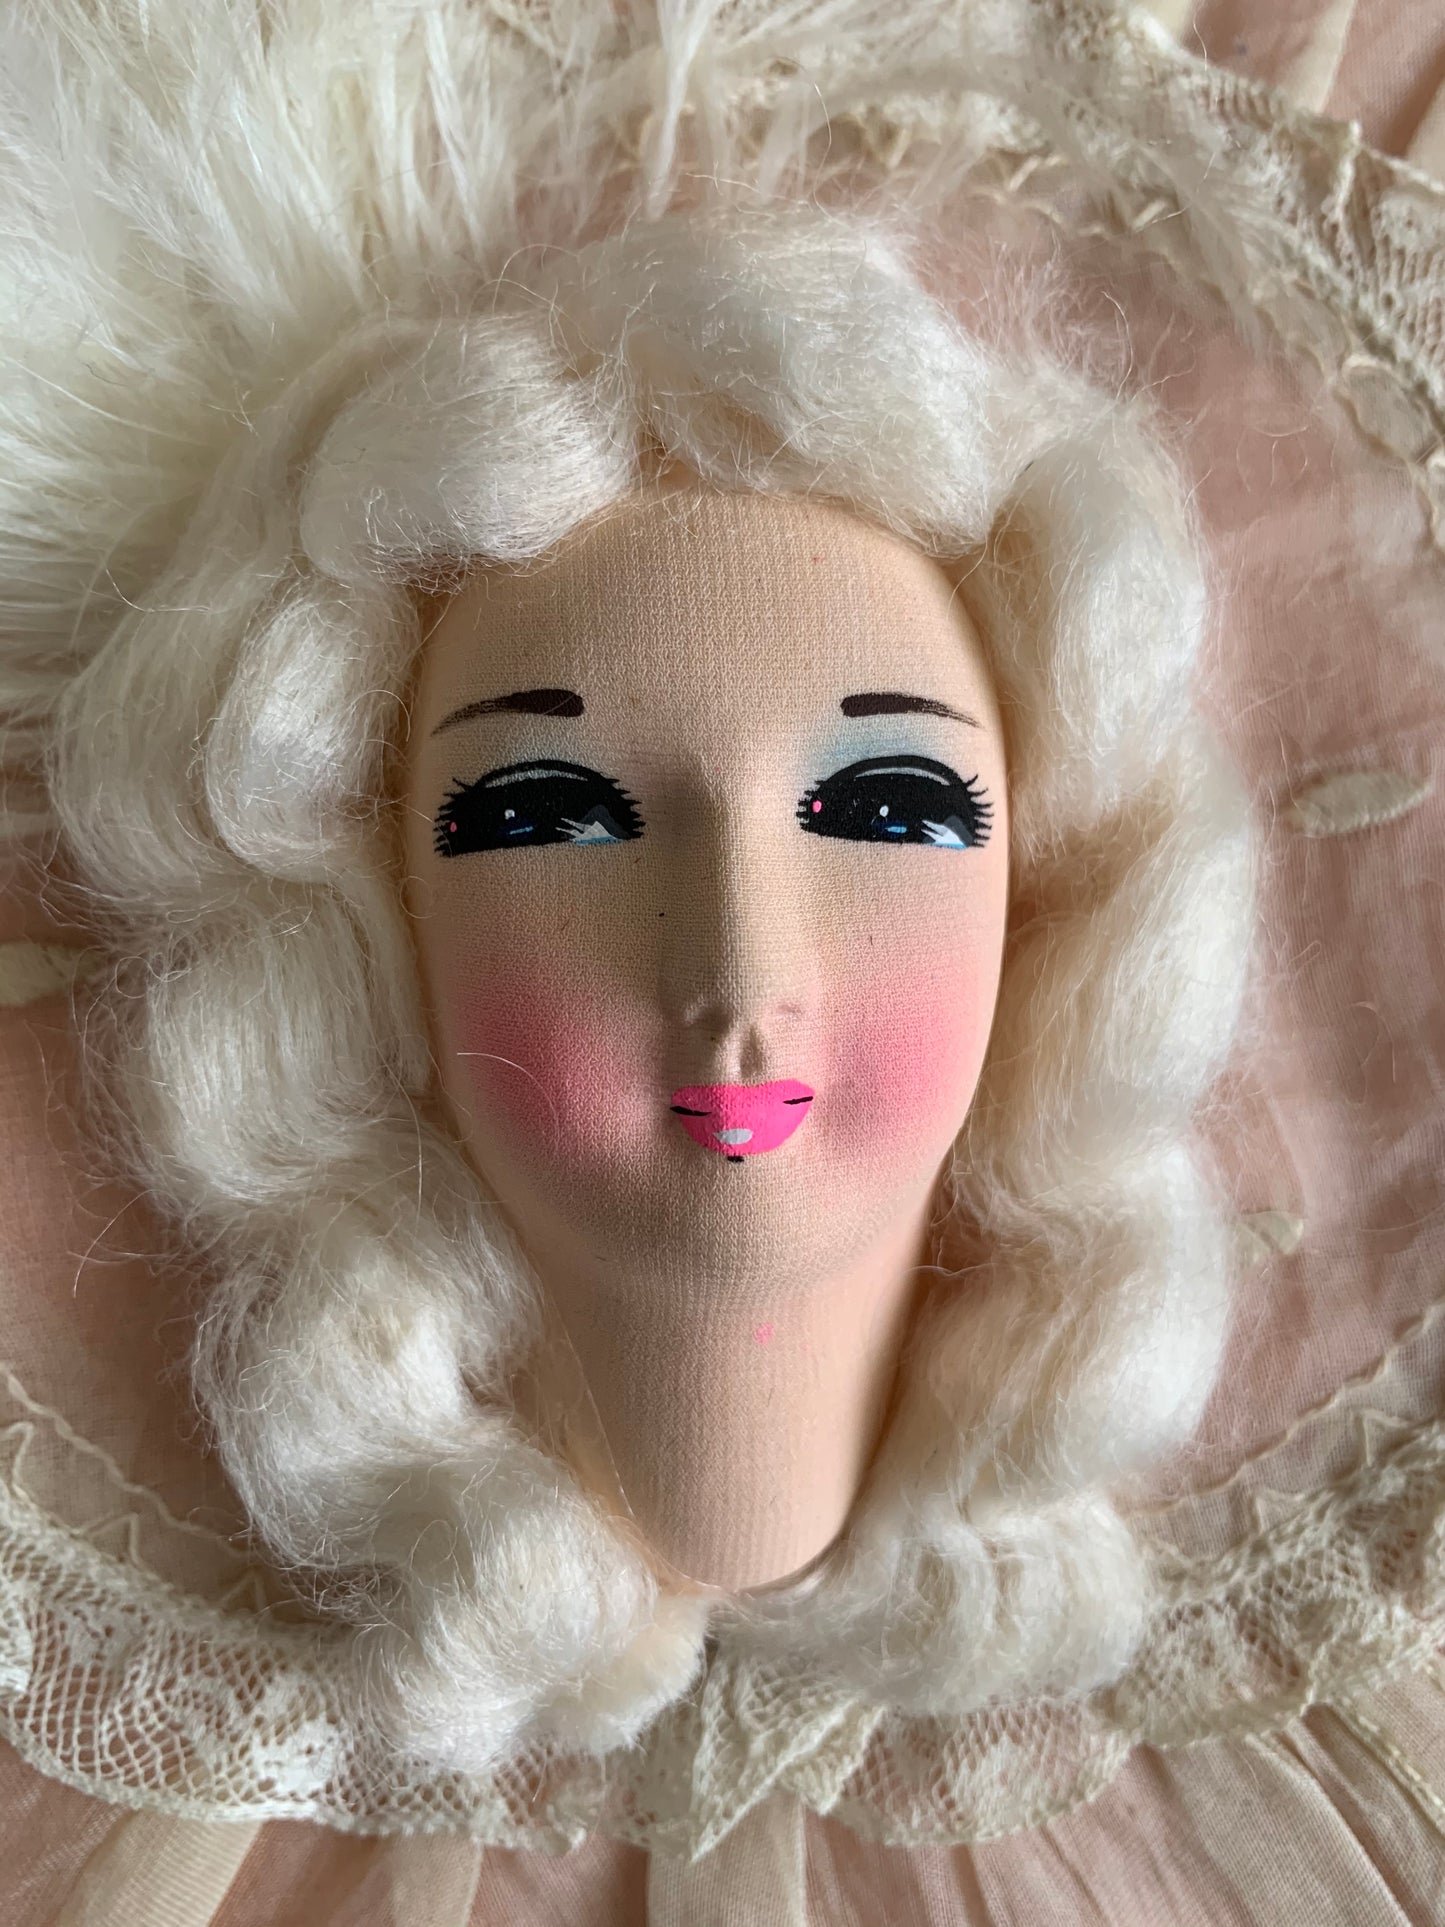 Vintage assembled doll face pillow